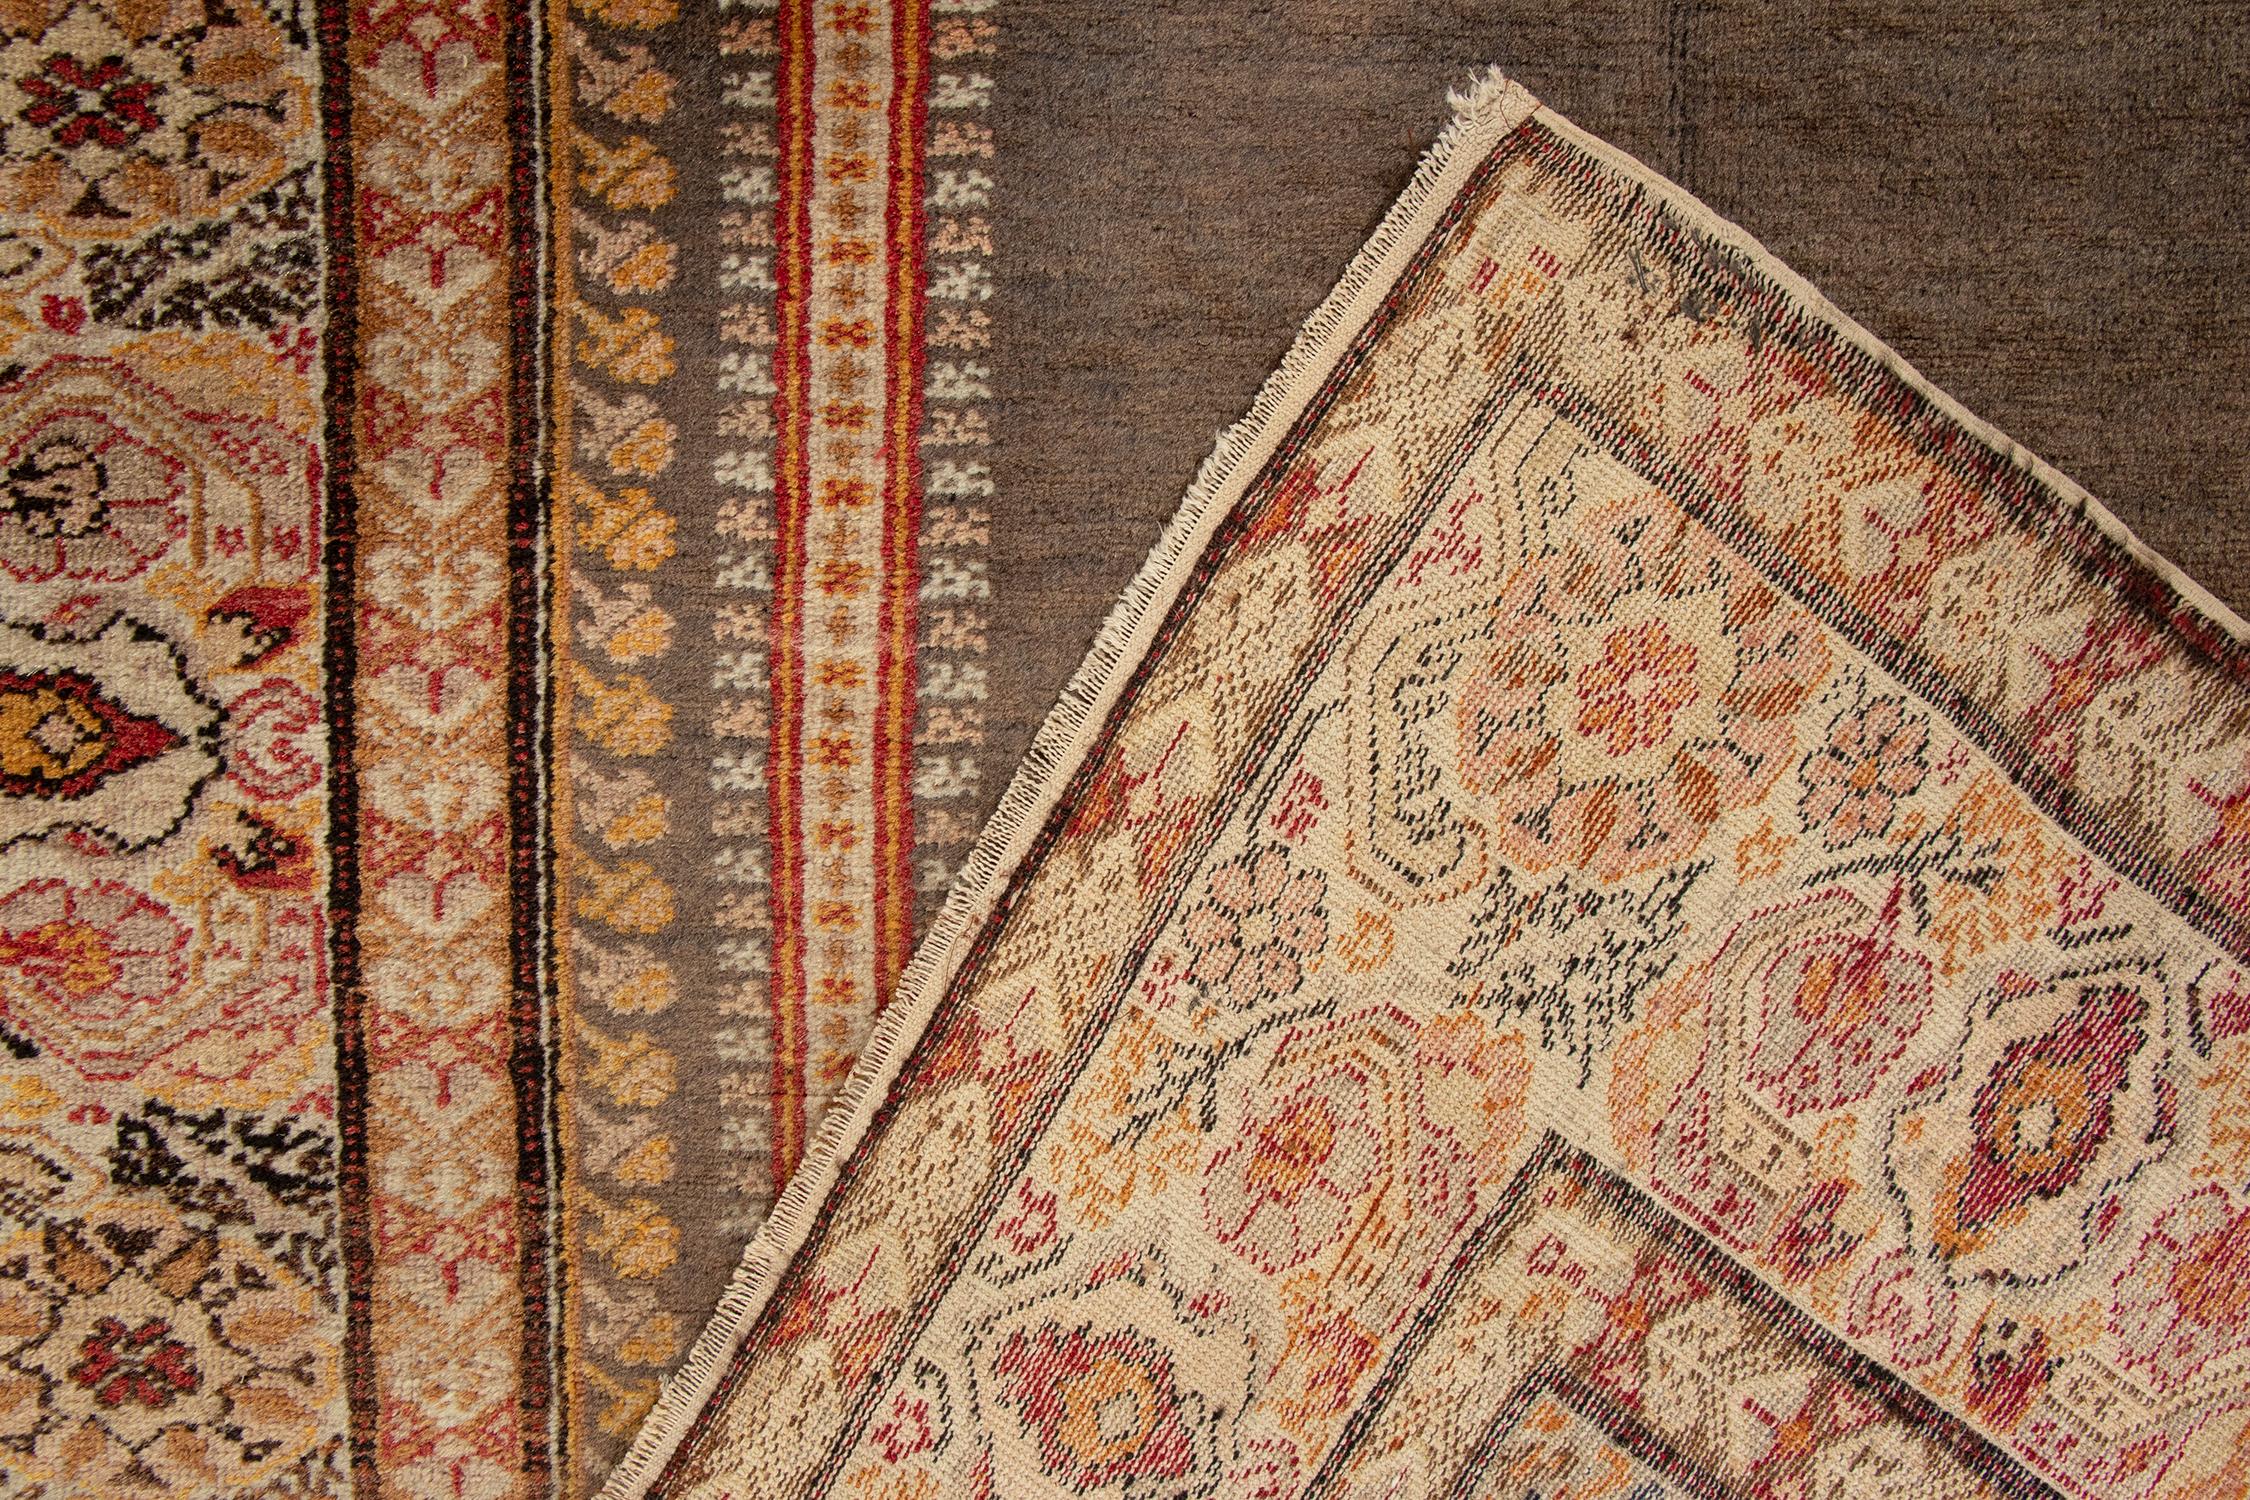 Wool Antique Kayseri rug in Red, Gold & Beige Floral Patterns by Rug & Kilim For Sale